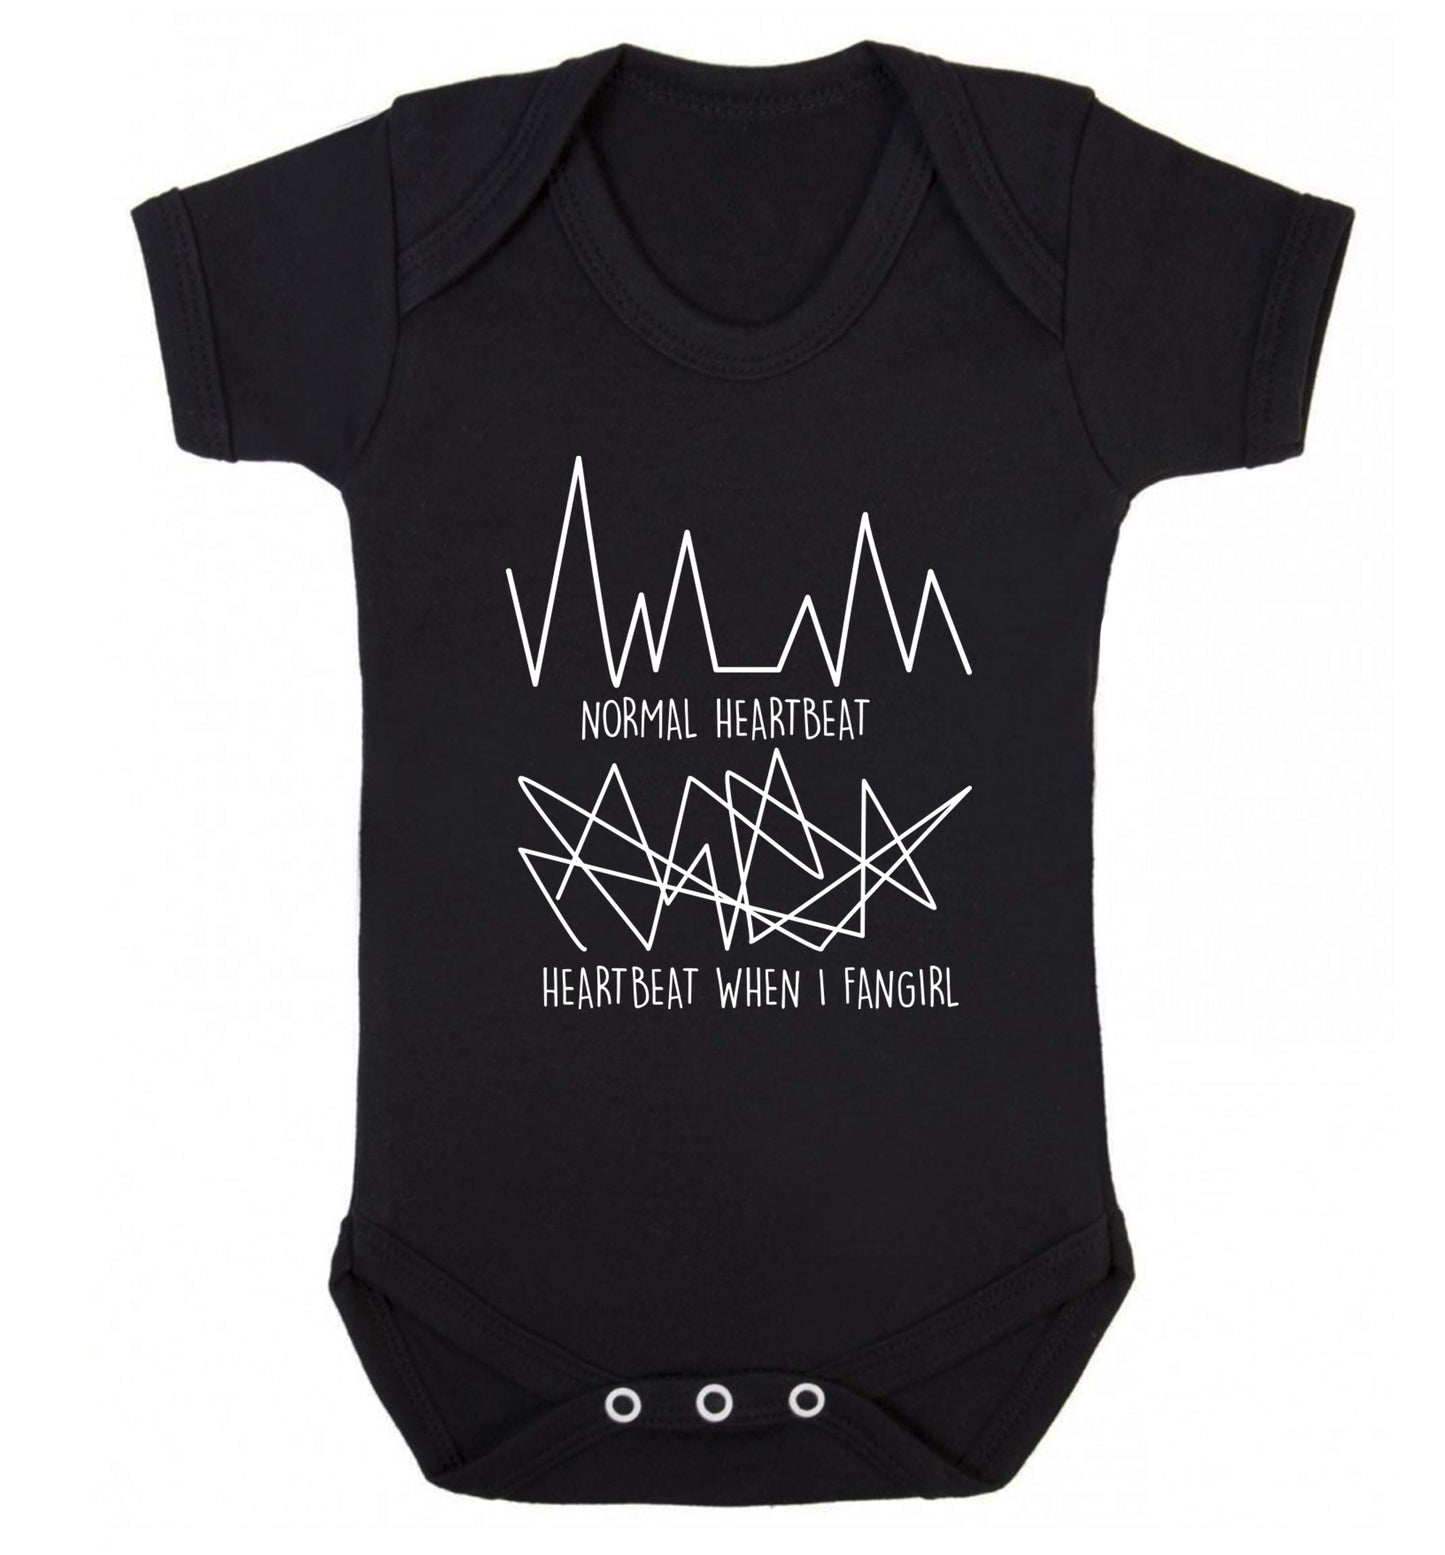 Normal heartbeat heartbeat when I fangirl Baby Vest black 18-24 months